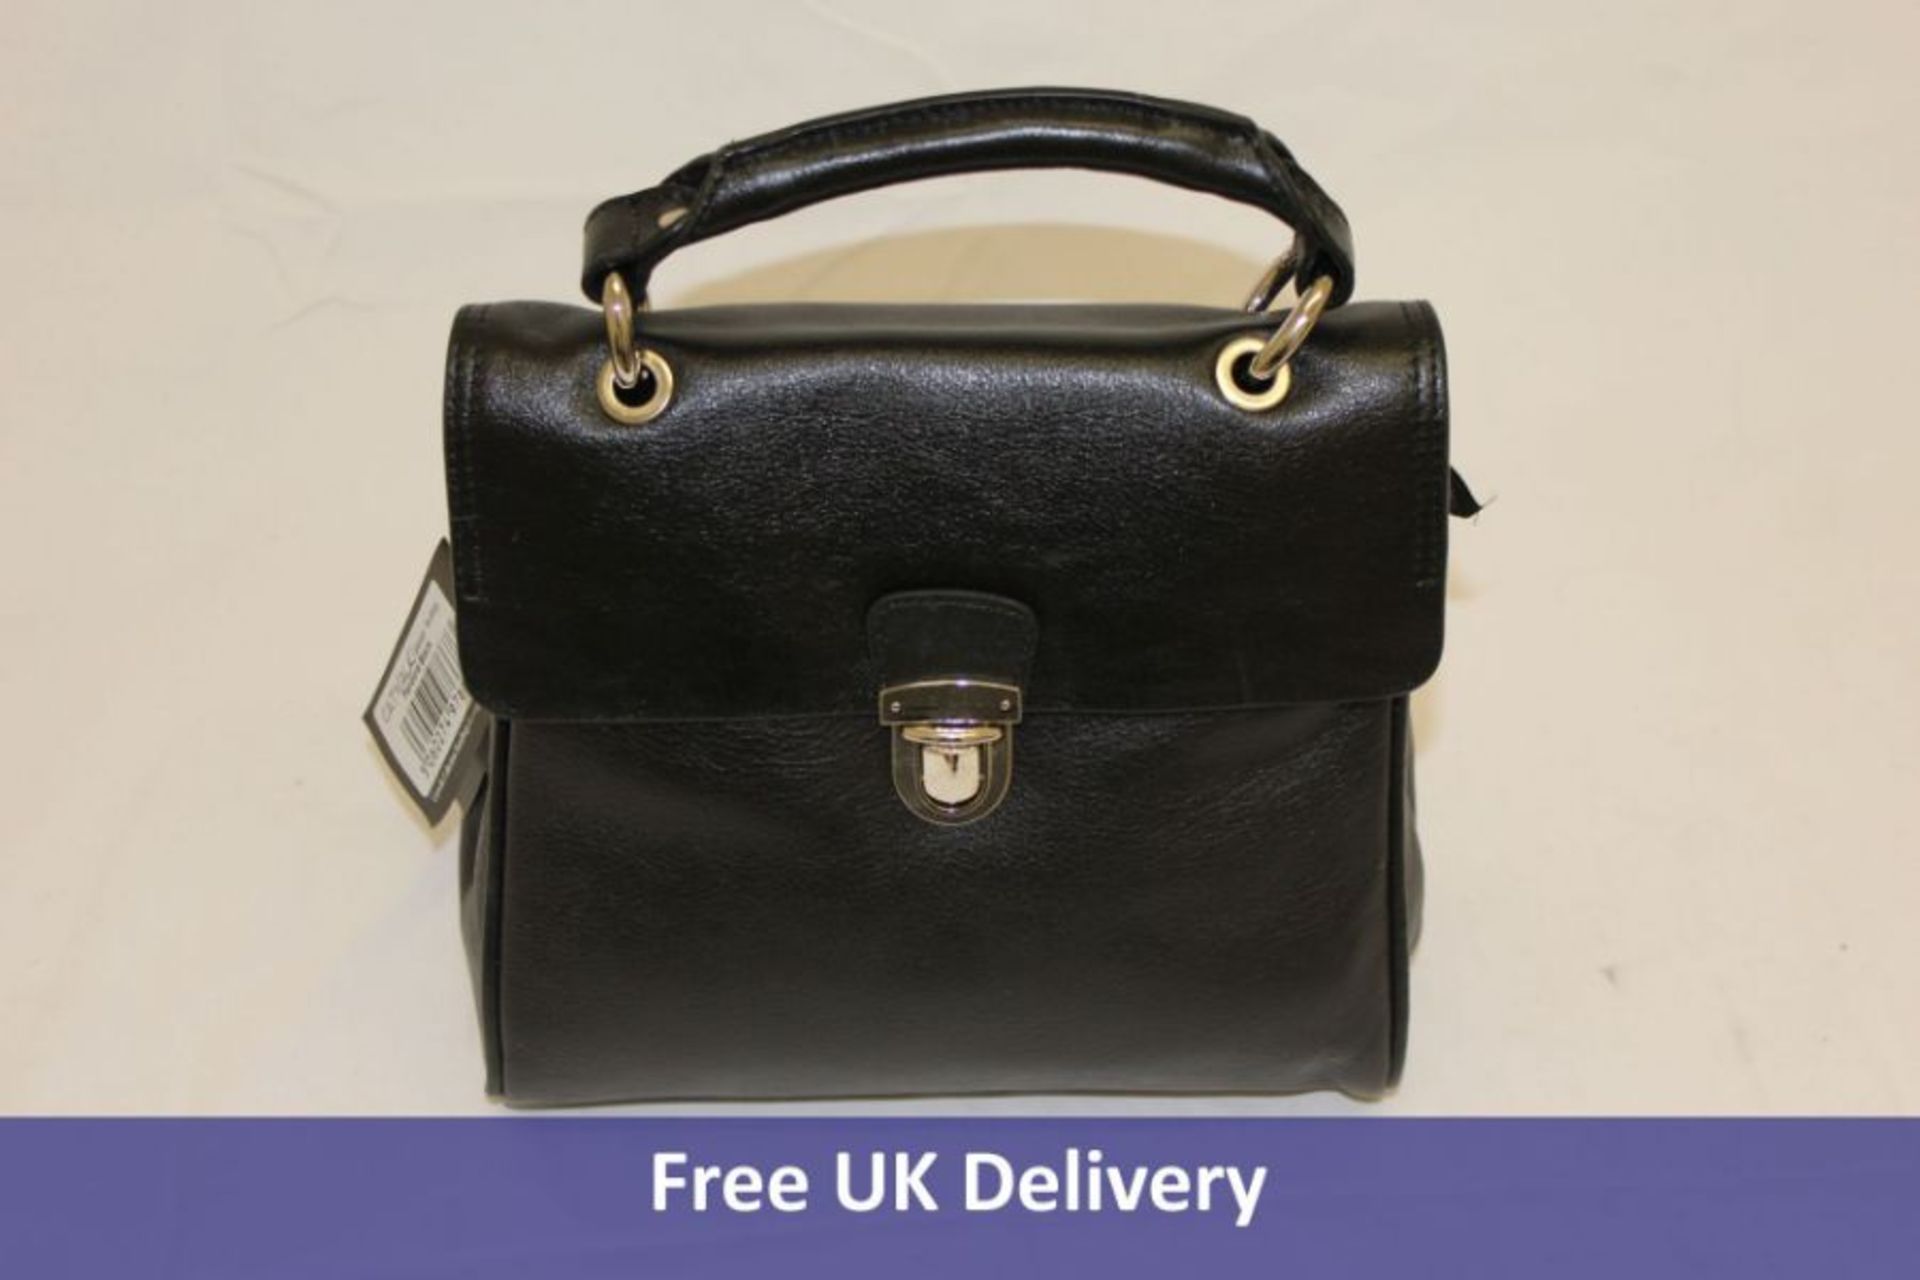 Three Catwalk Collection Handbags to include 3x Vintage Leather Handbag Shoulder, Bag/Cross Body Bag - Image 3 of 3